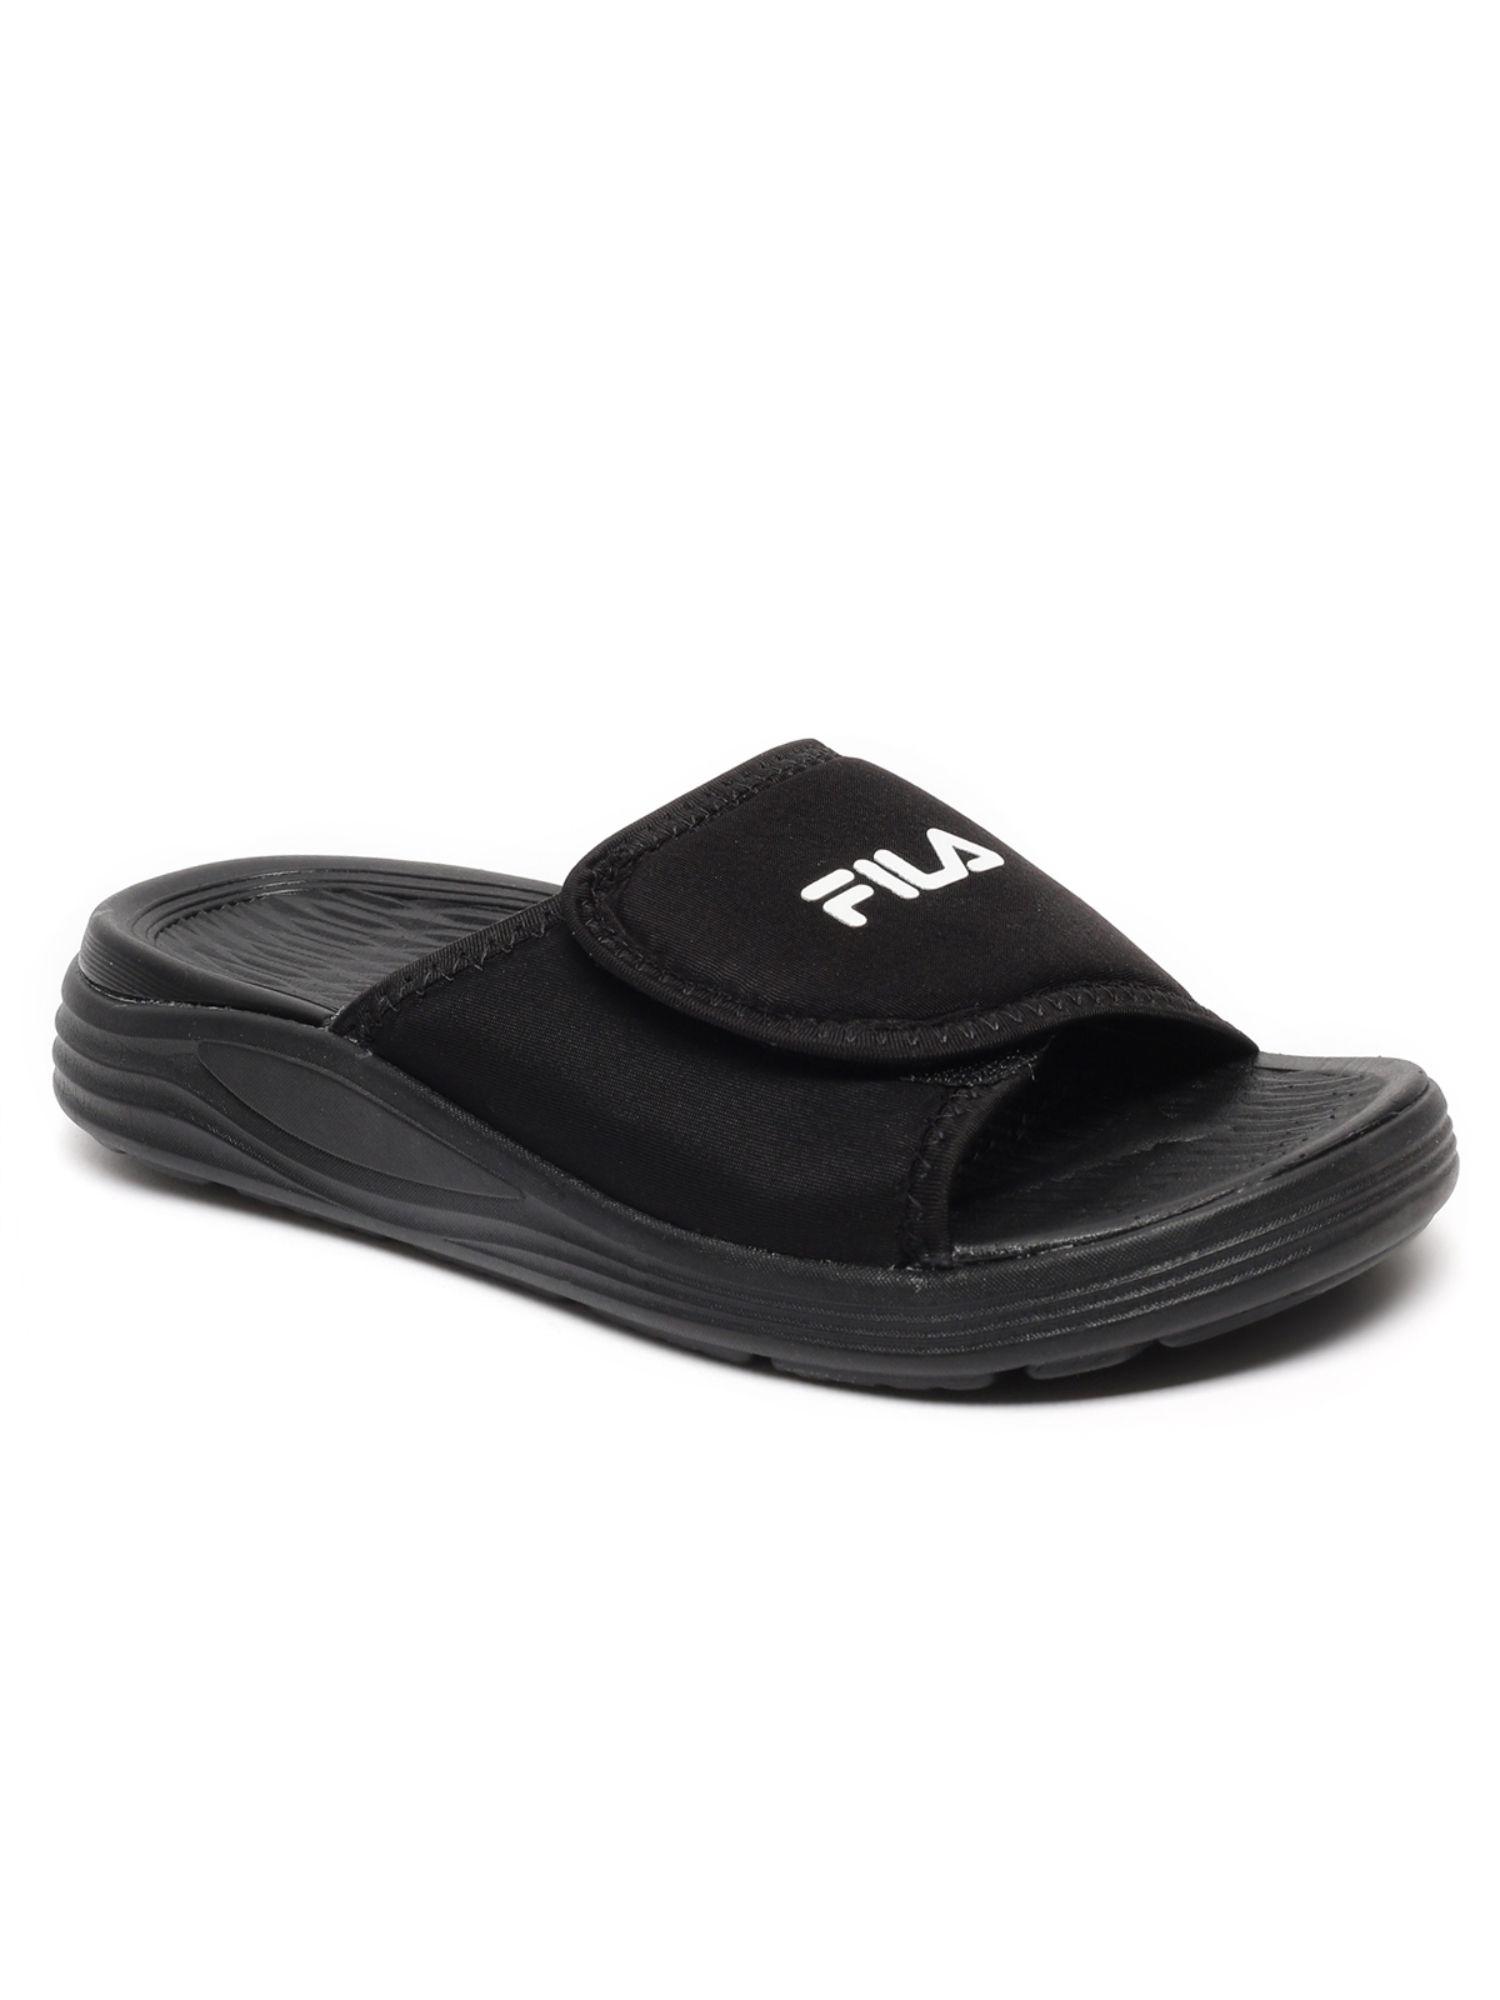 mexroa comfort footwear sliders black